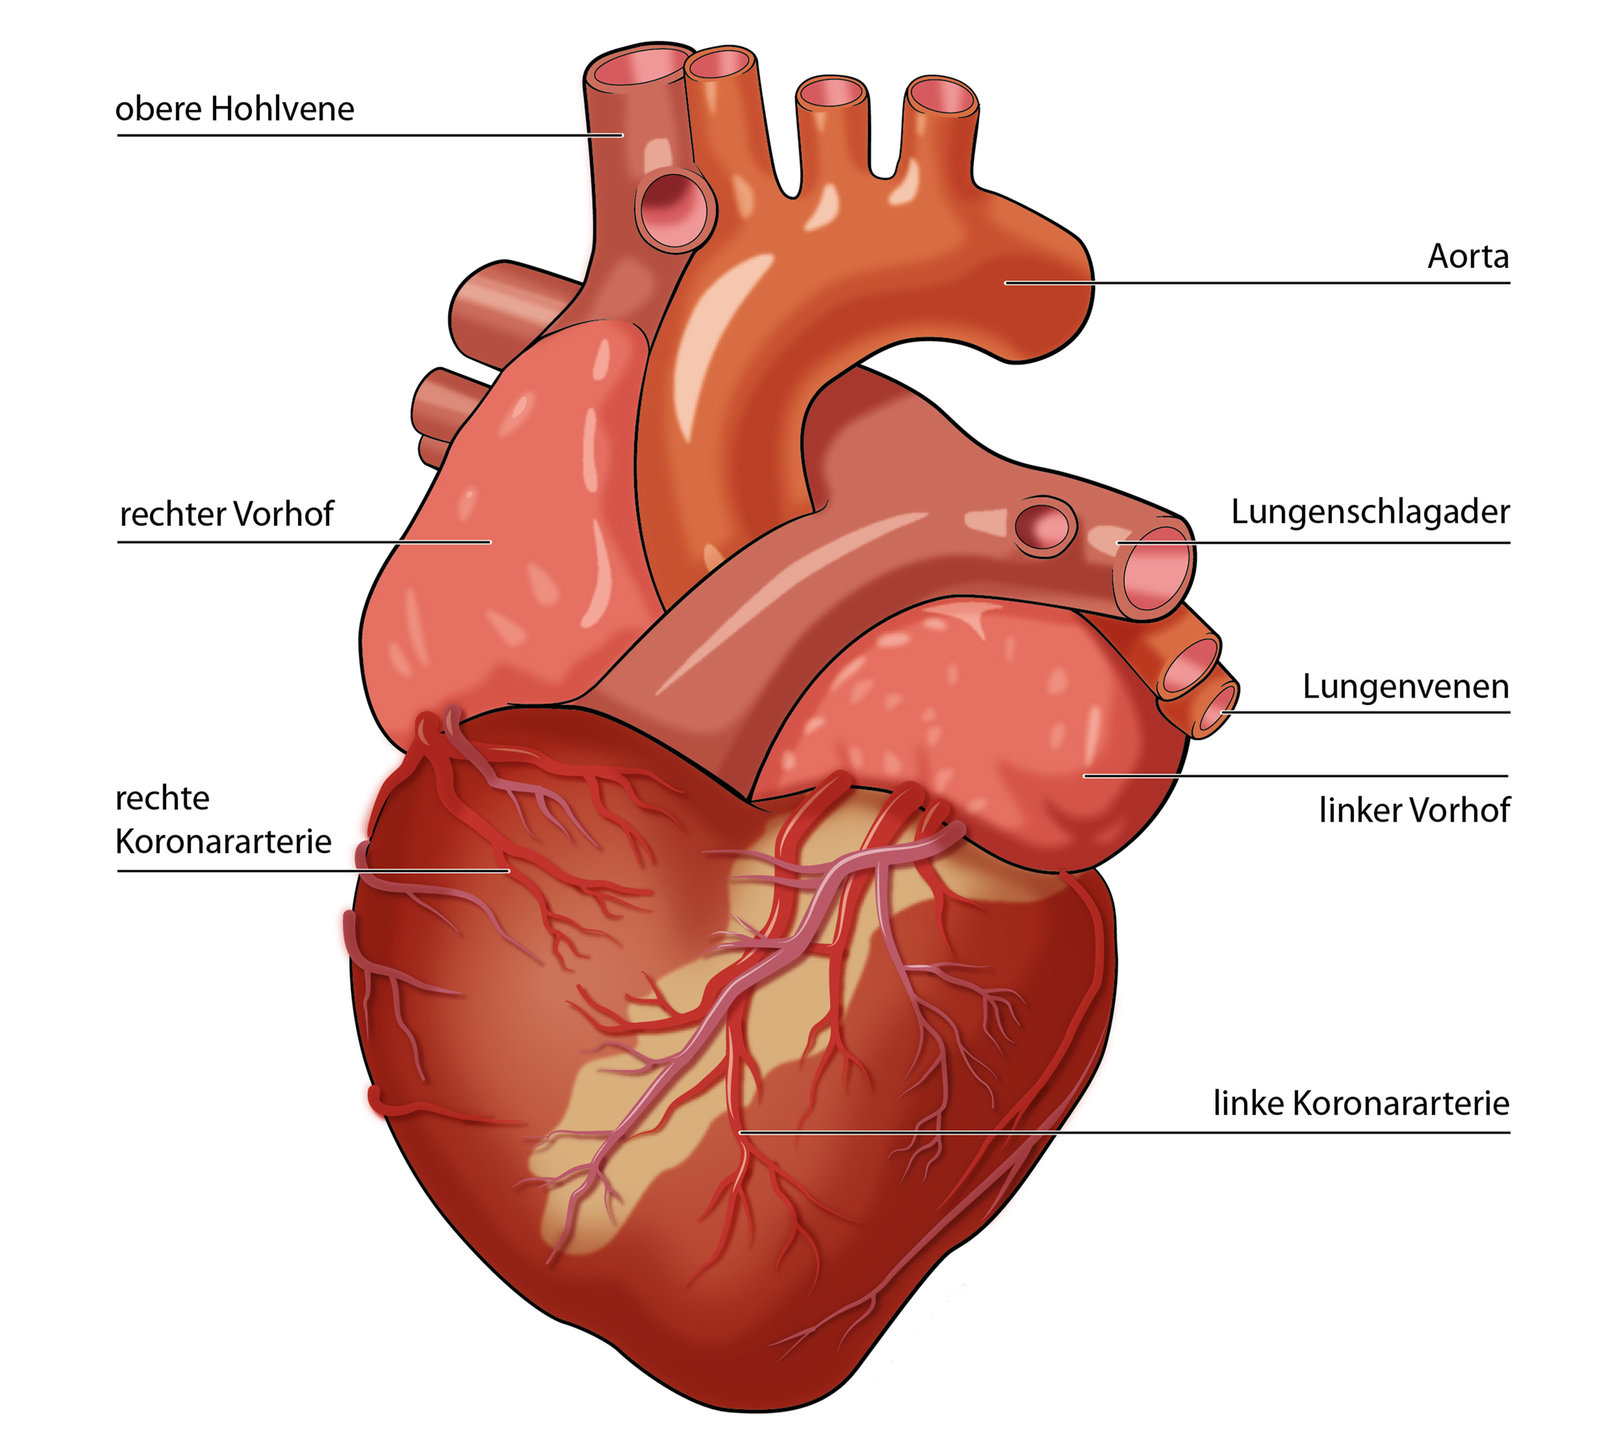 oculus-illustration-spital-herz-kardiologie-anatomie